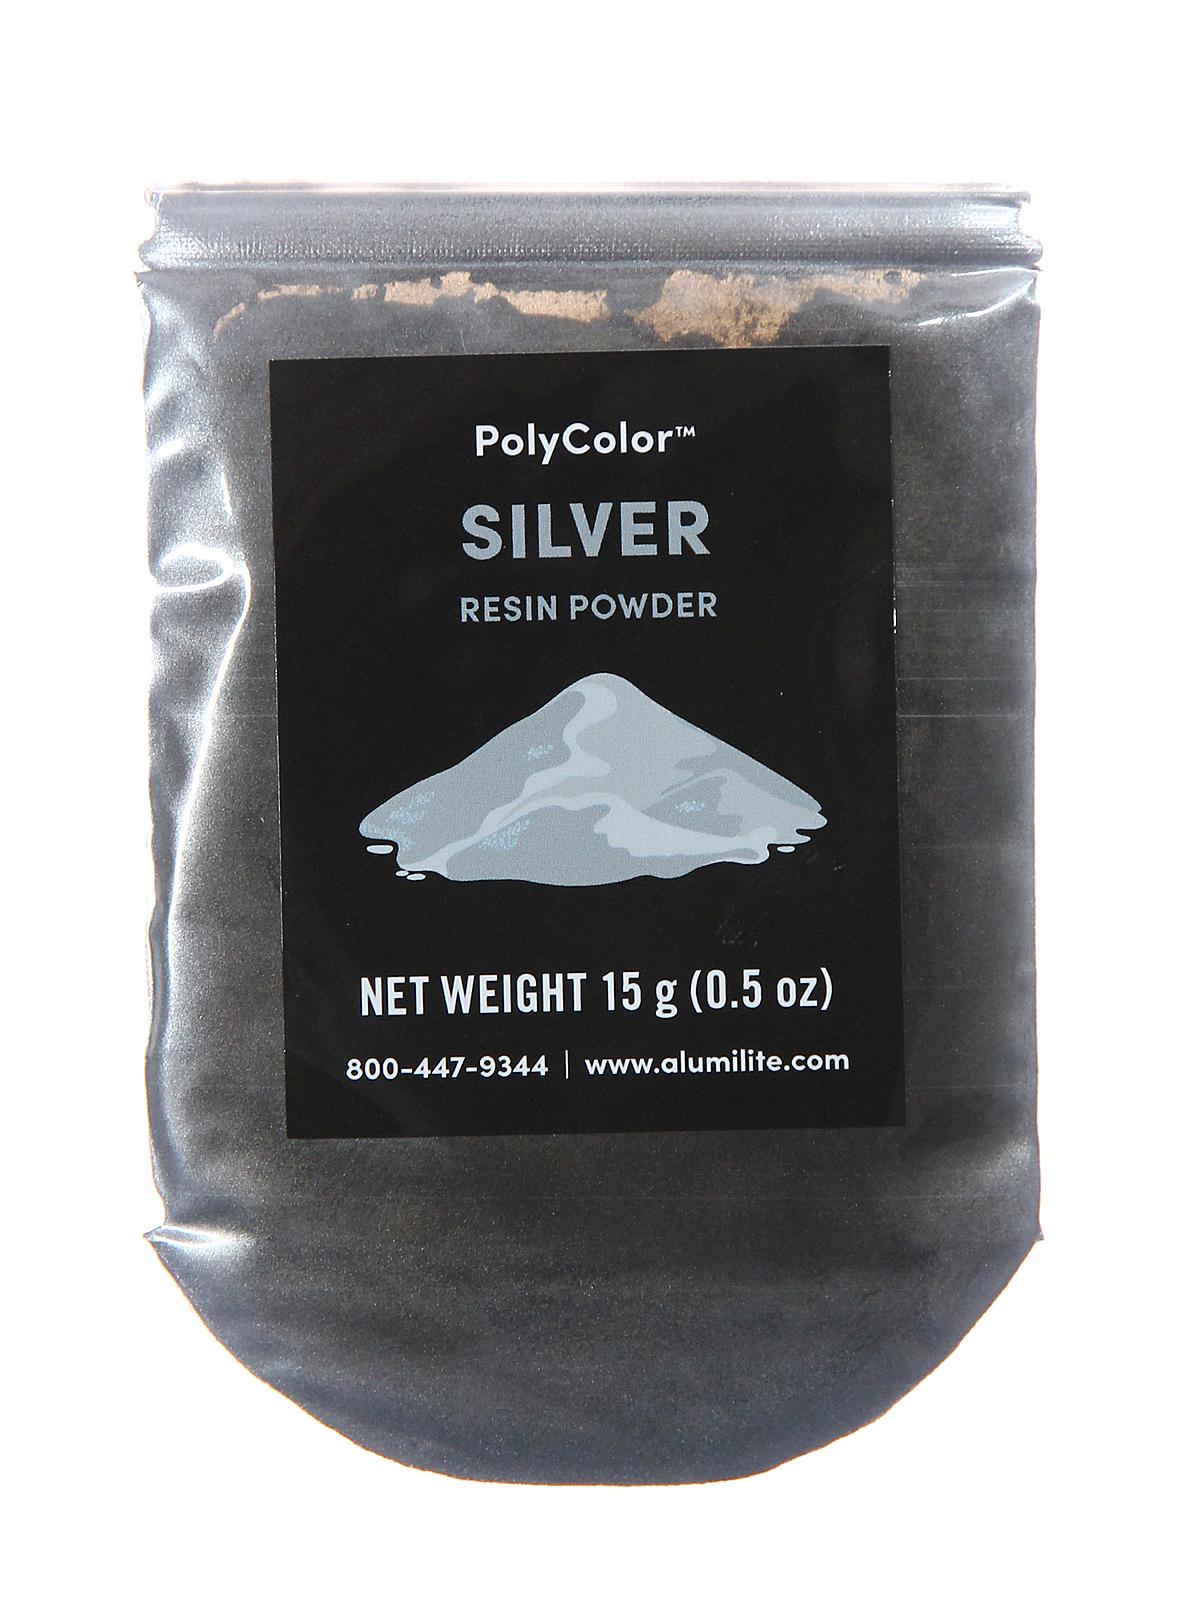 PolyColor Resin Powder Silver Bag 15 G (0.5 Oz.)